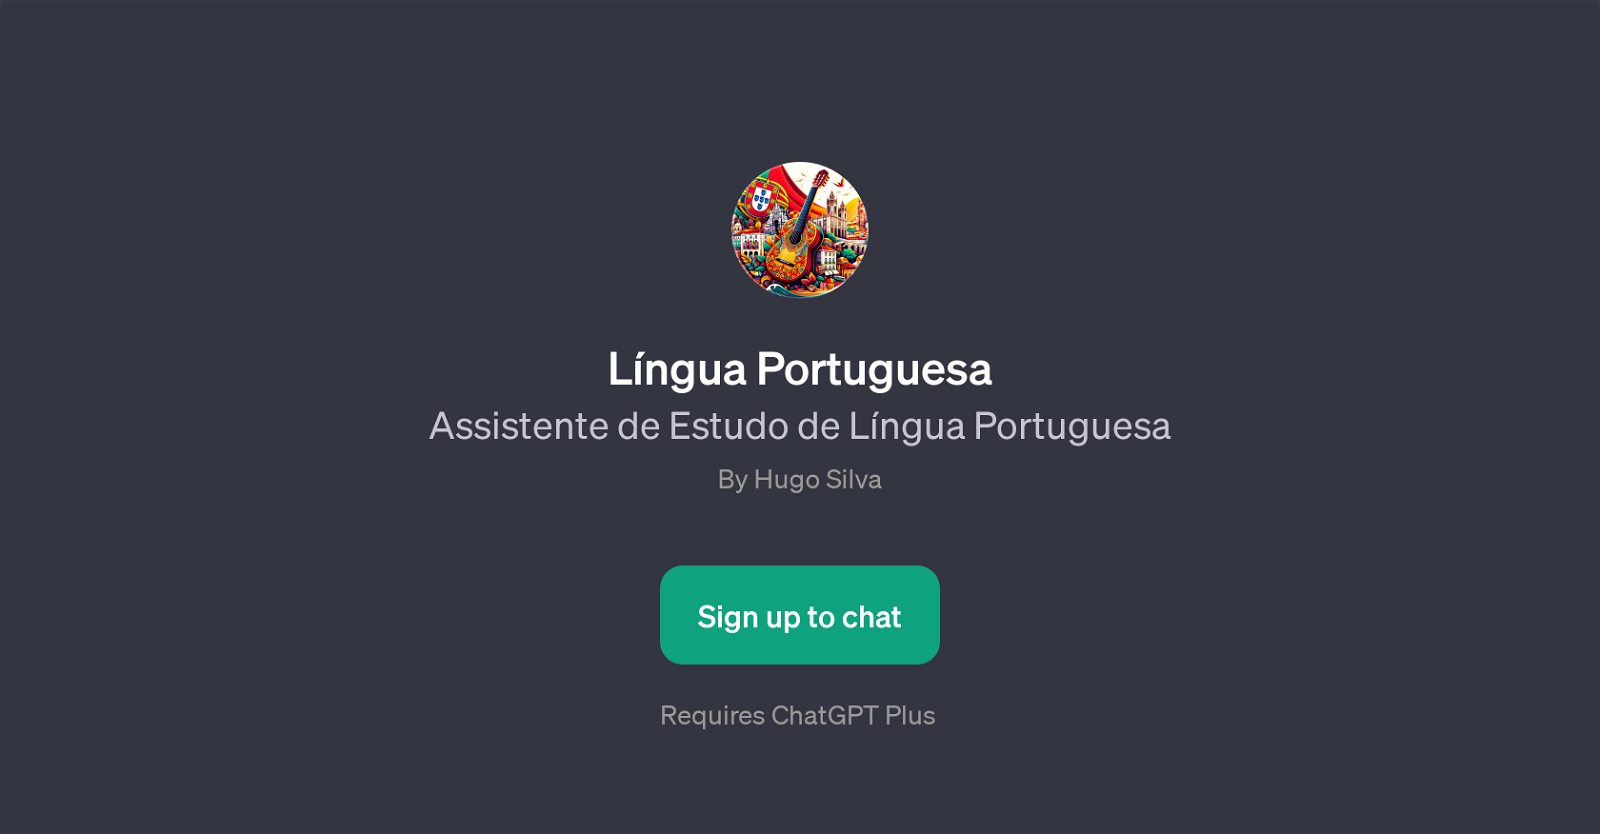 Lngua Portuguesa website